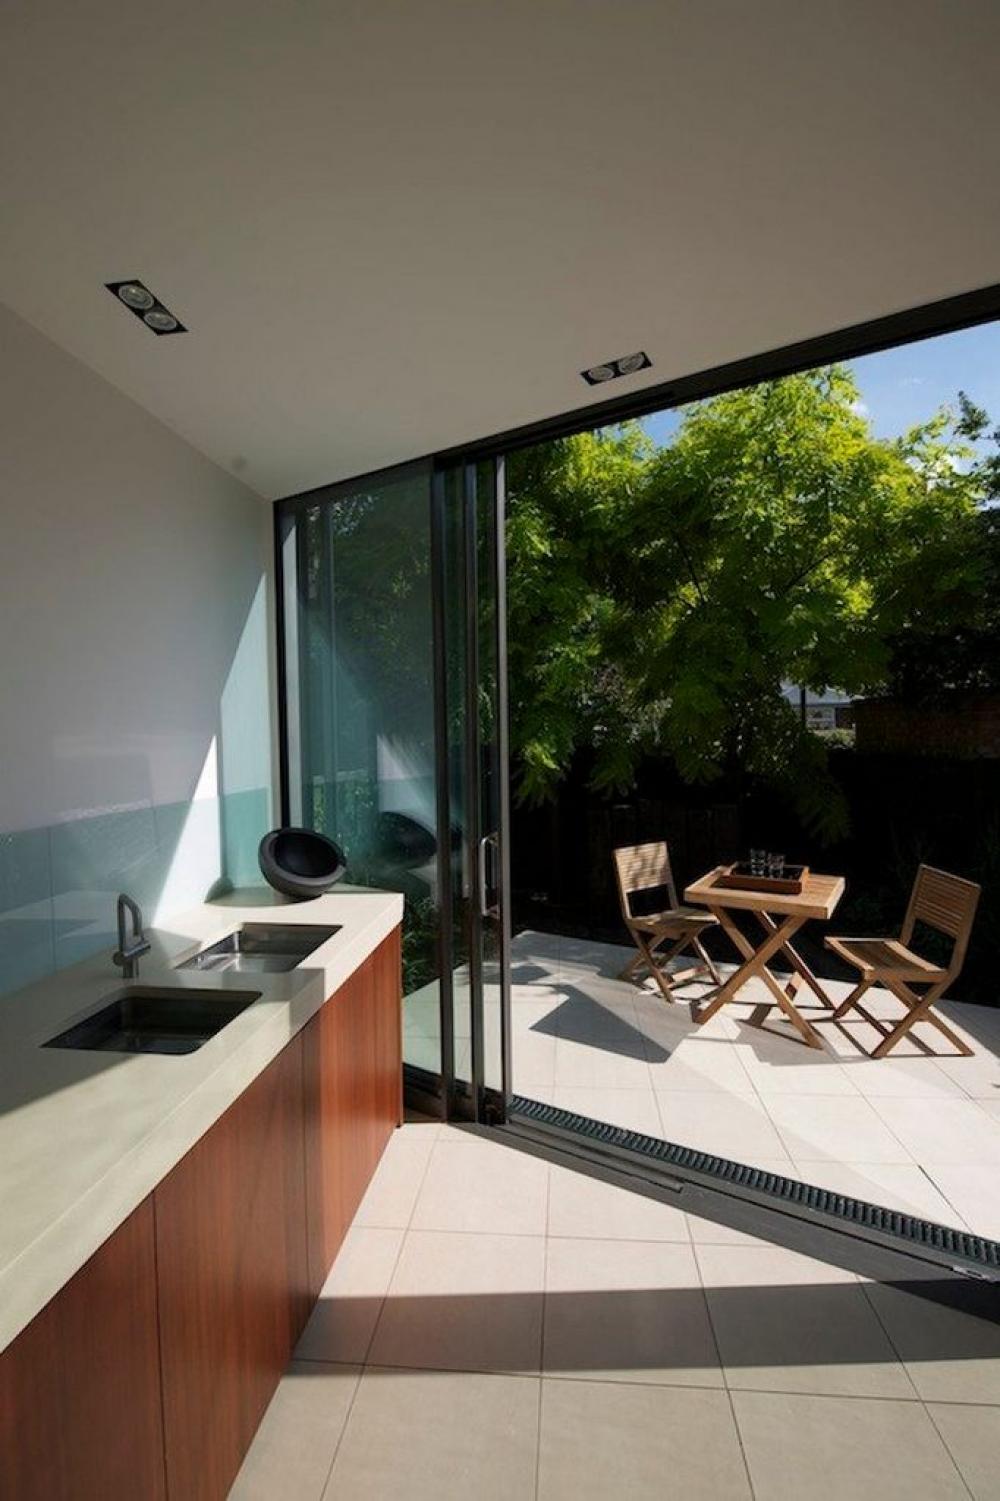 small kitchen design ideas in minimalist house open space ideas to garden